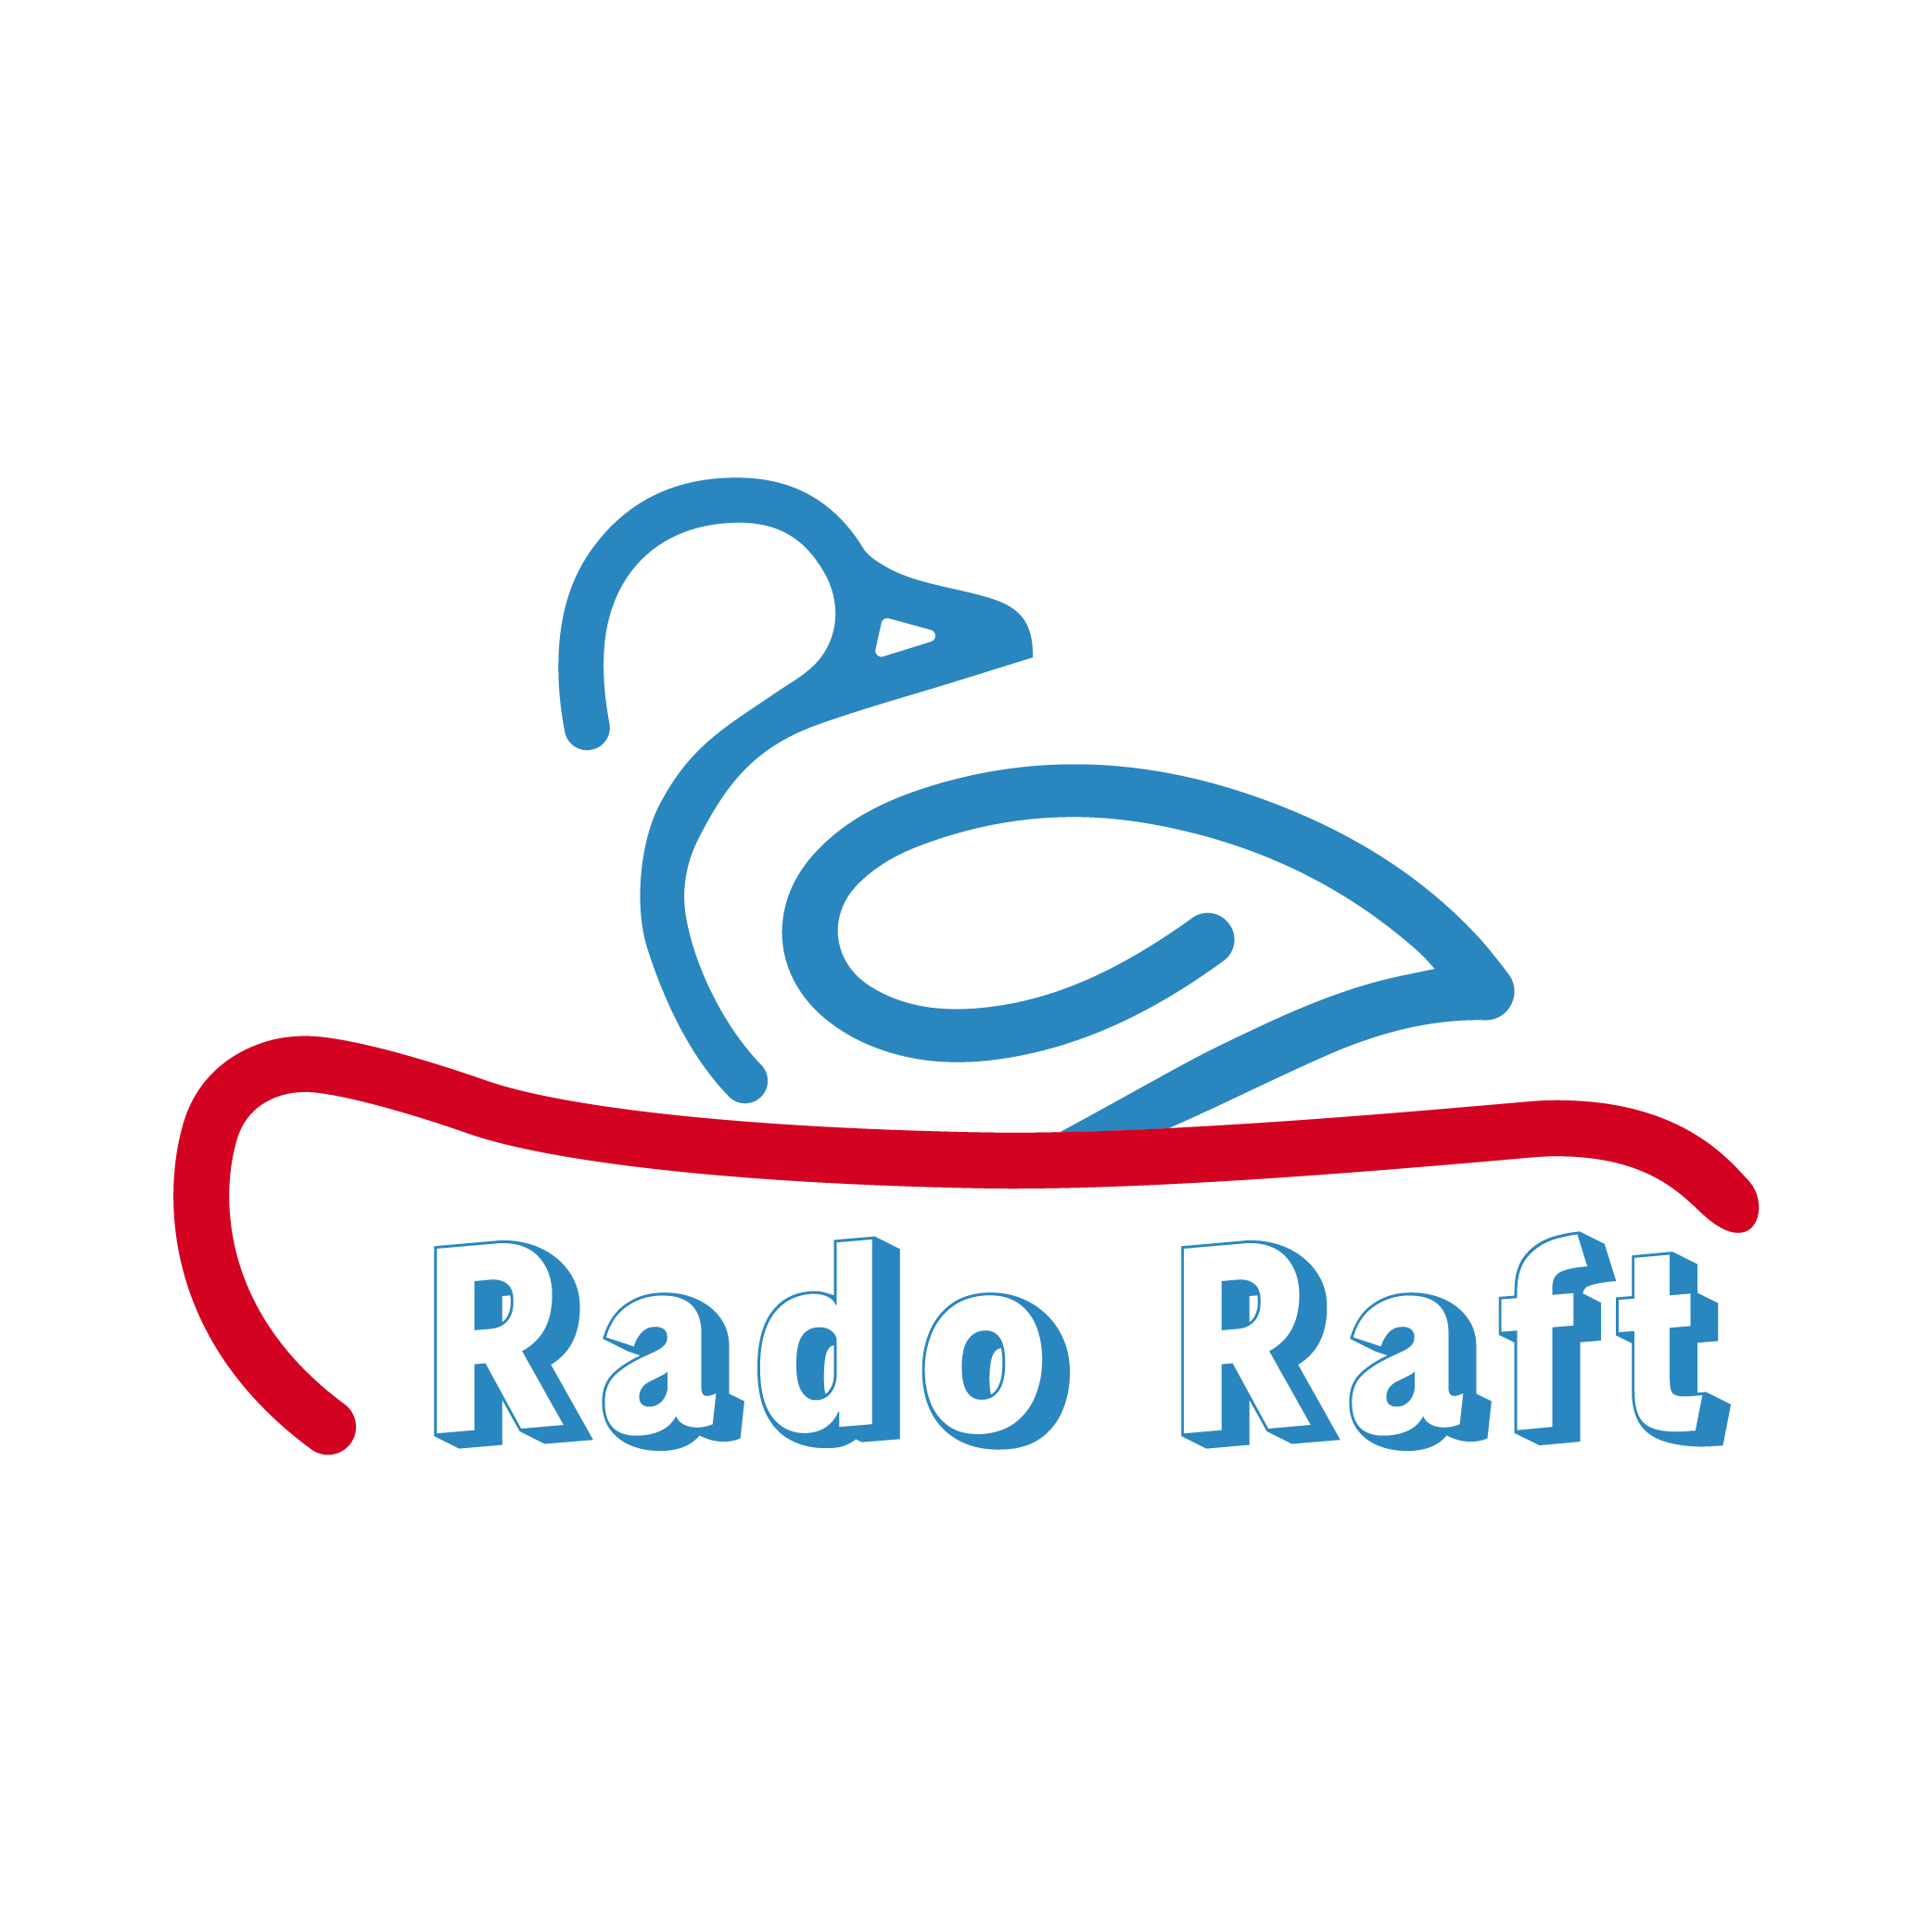 Rado Raft